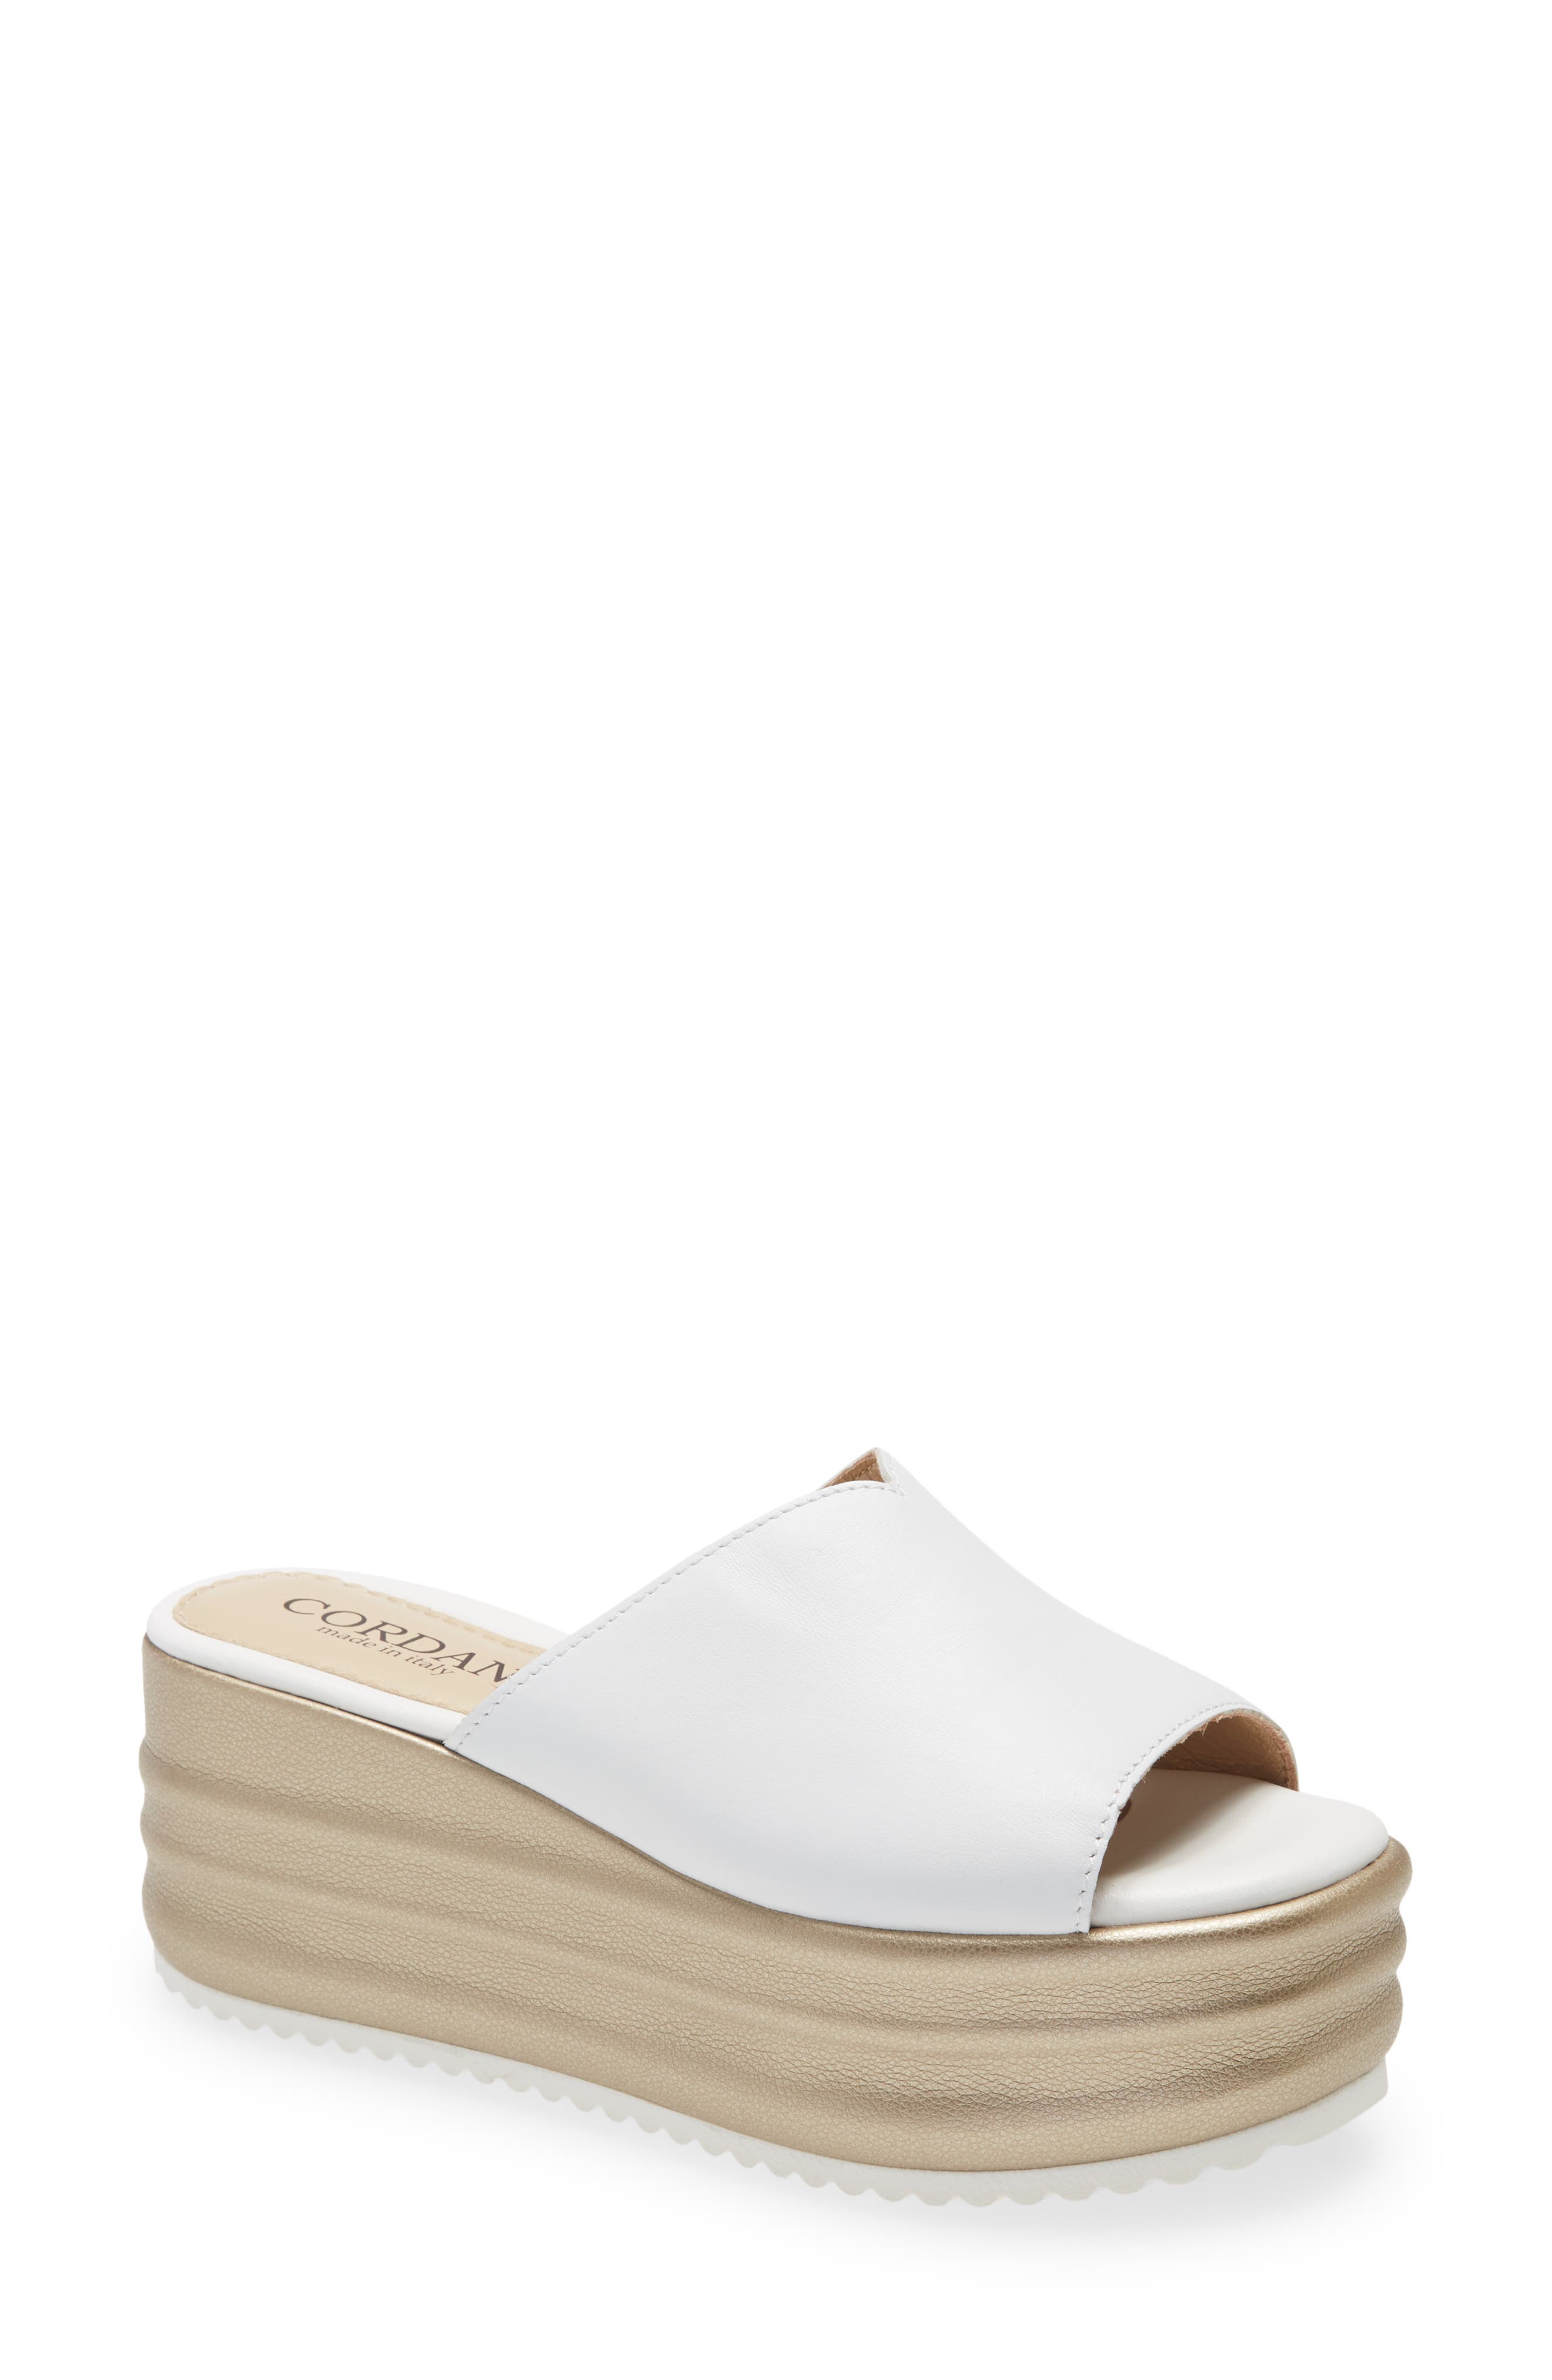 Cordani Yearn Platform Slide Sandal in White Leather